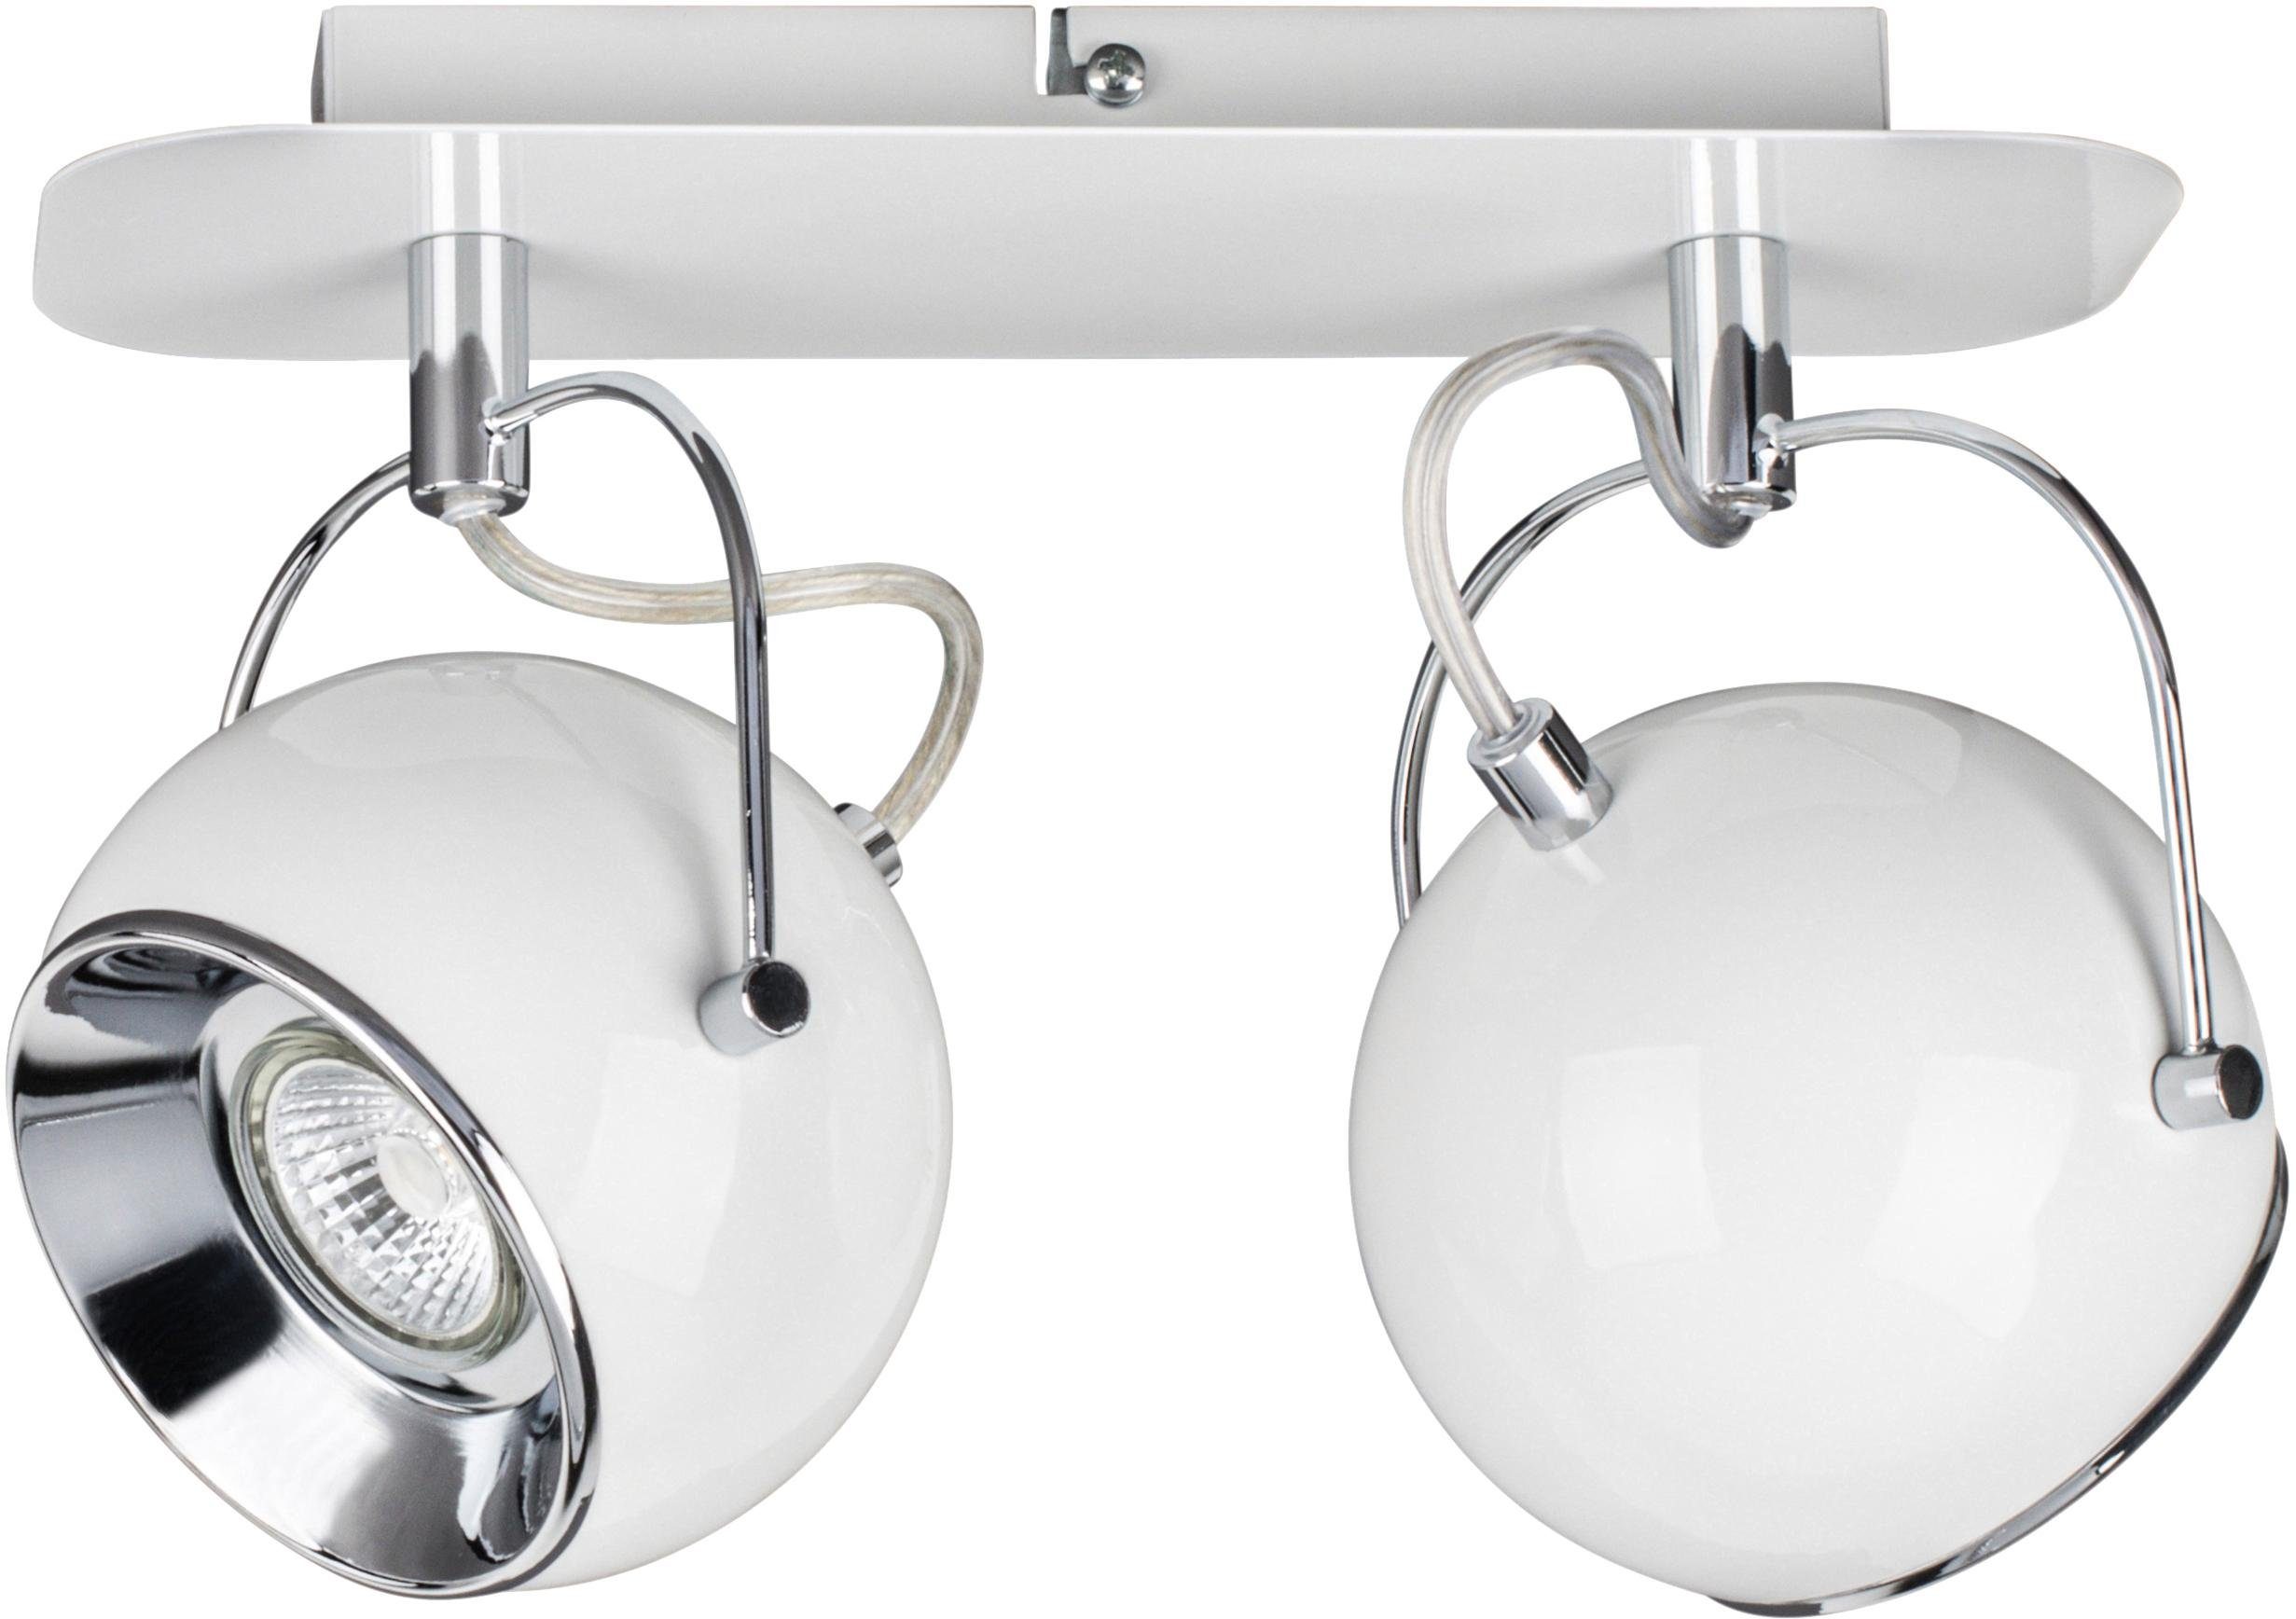 SPOT Light Plafondlamp BALL Inclusief ledverlichting, zwenkbare en flexibele spots, Made in EU